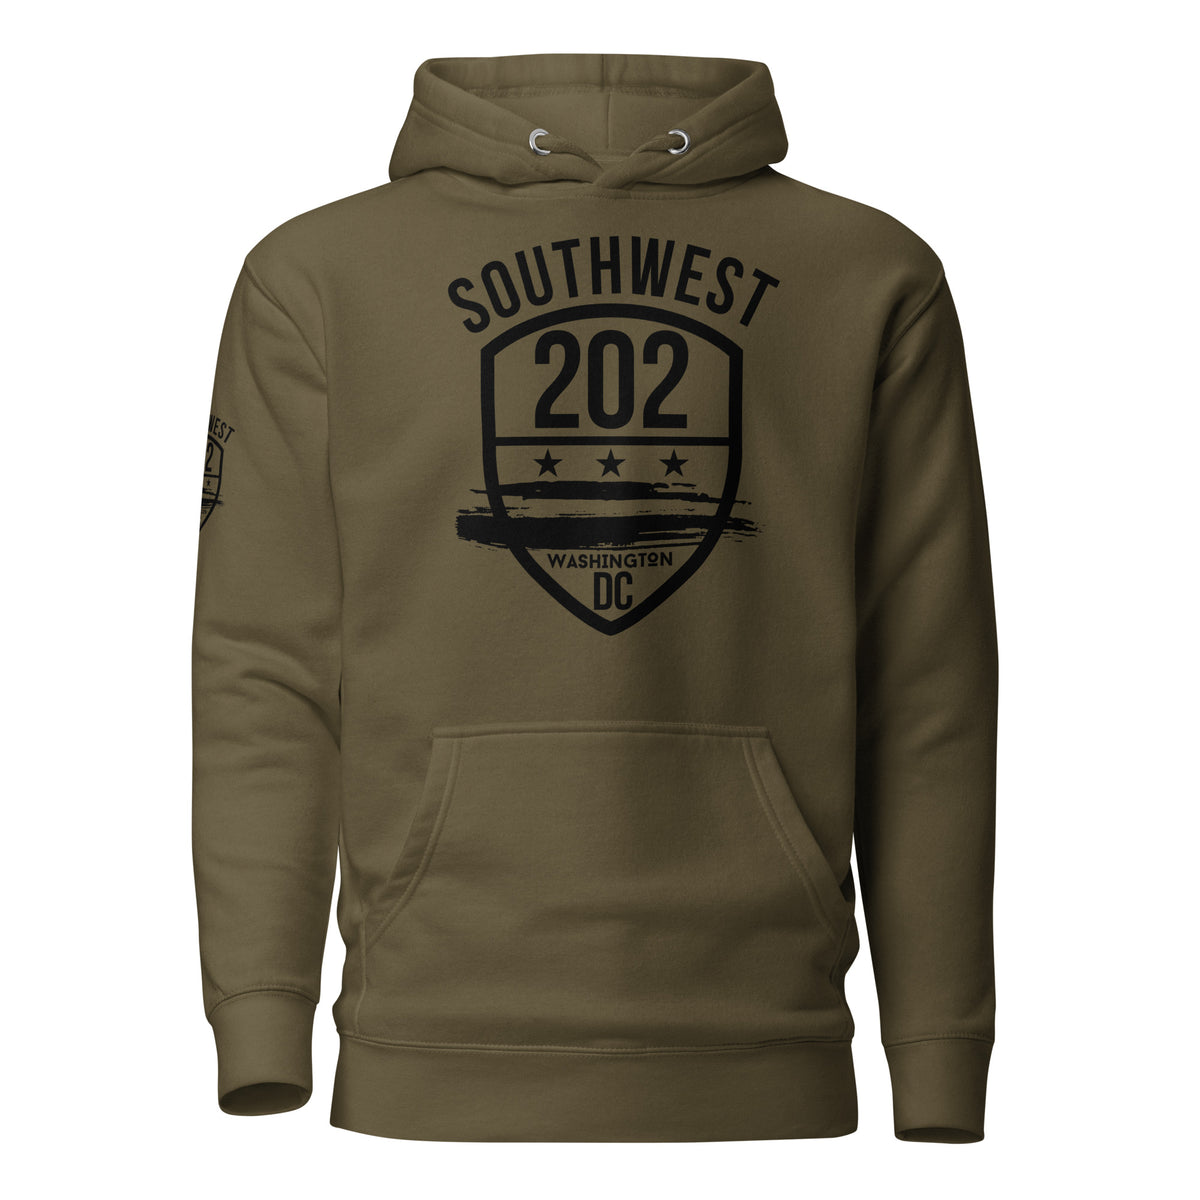 'SOUTHWEST/202' Emblem on Green Unisex Hoodie